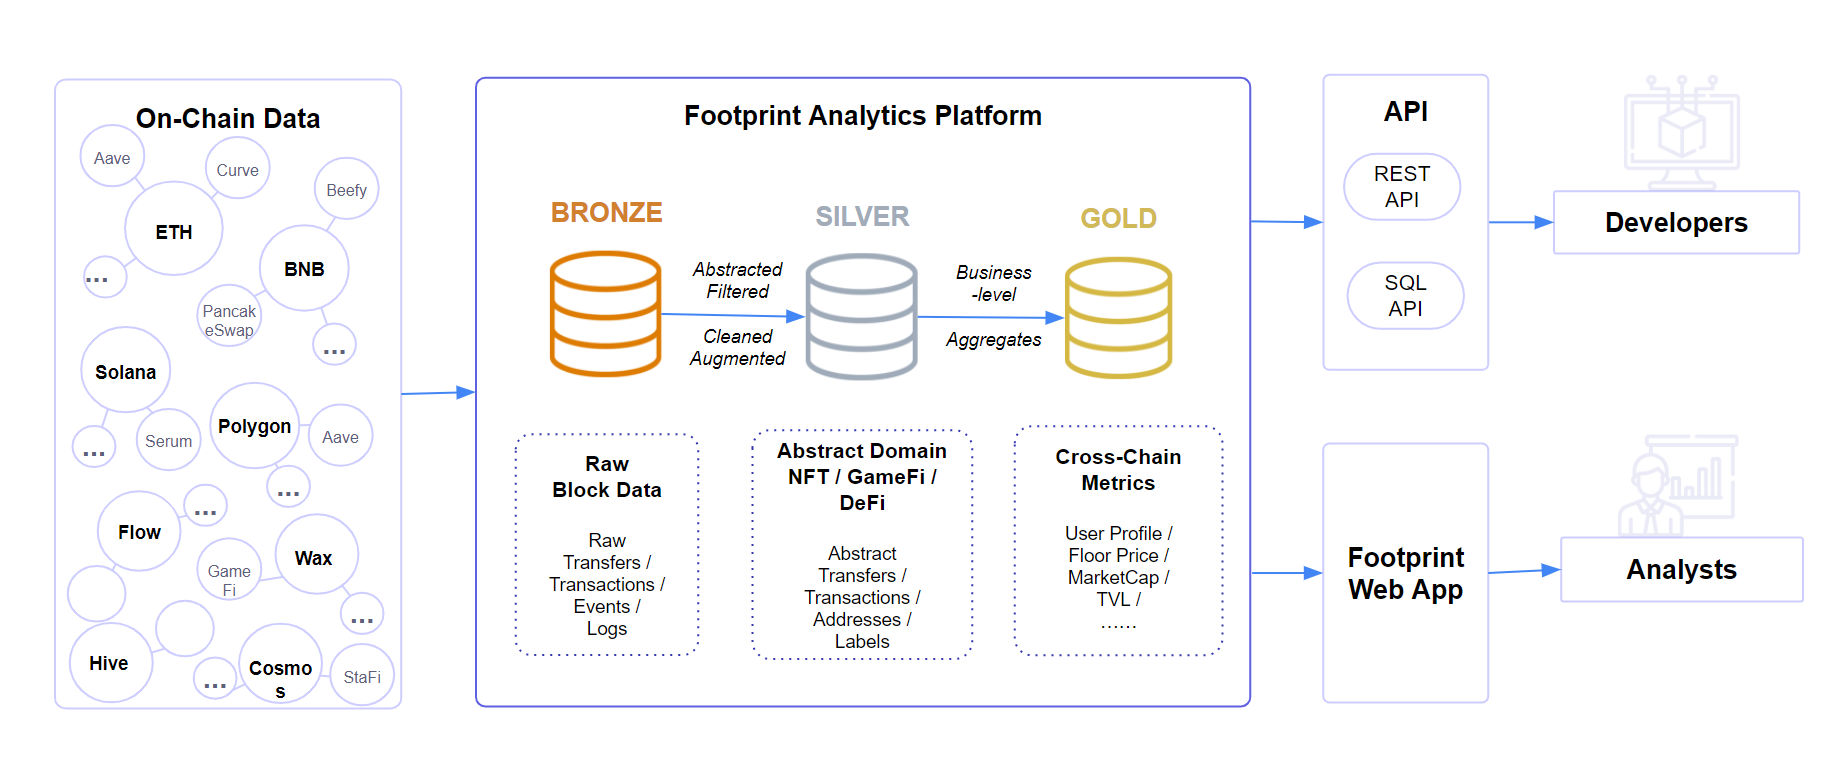 Footprint Analytics cover